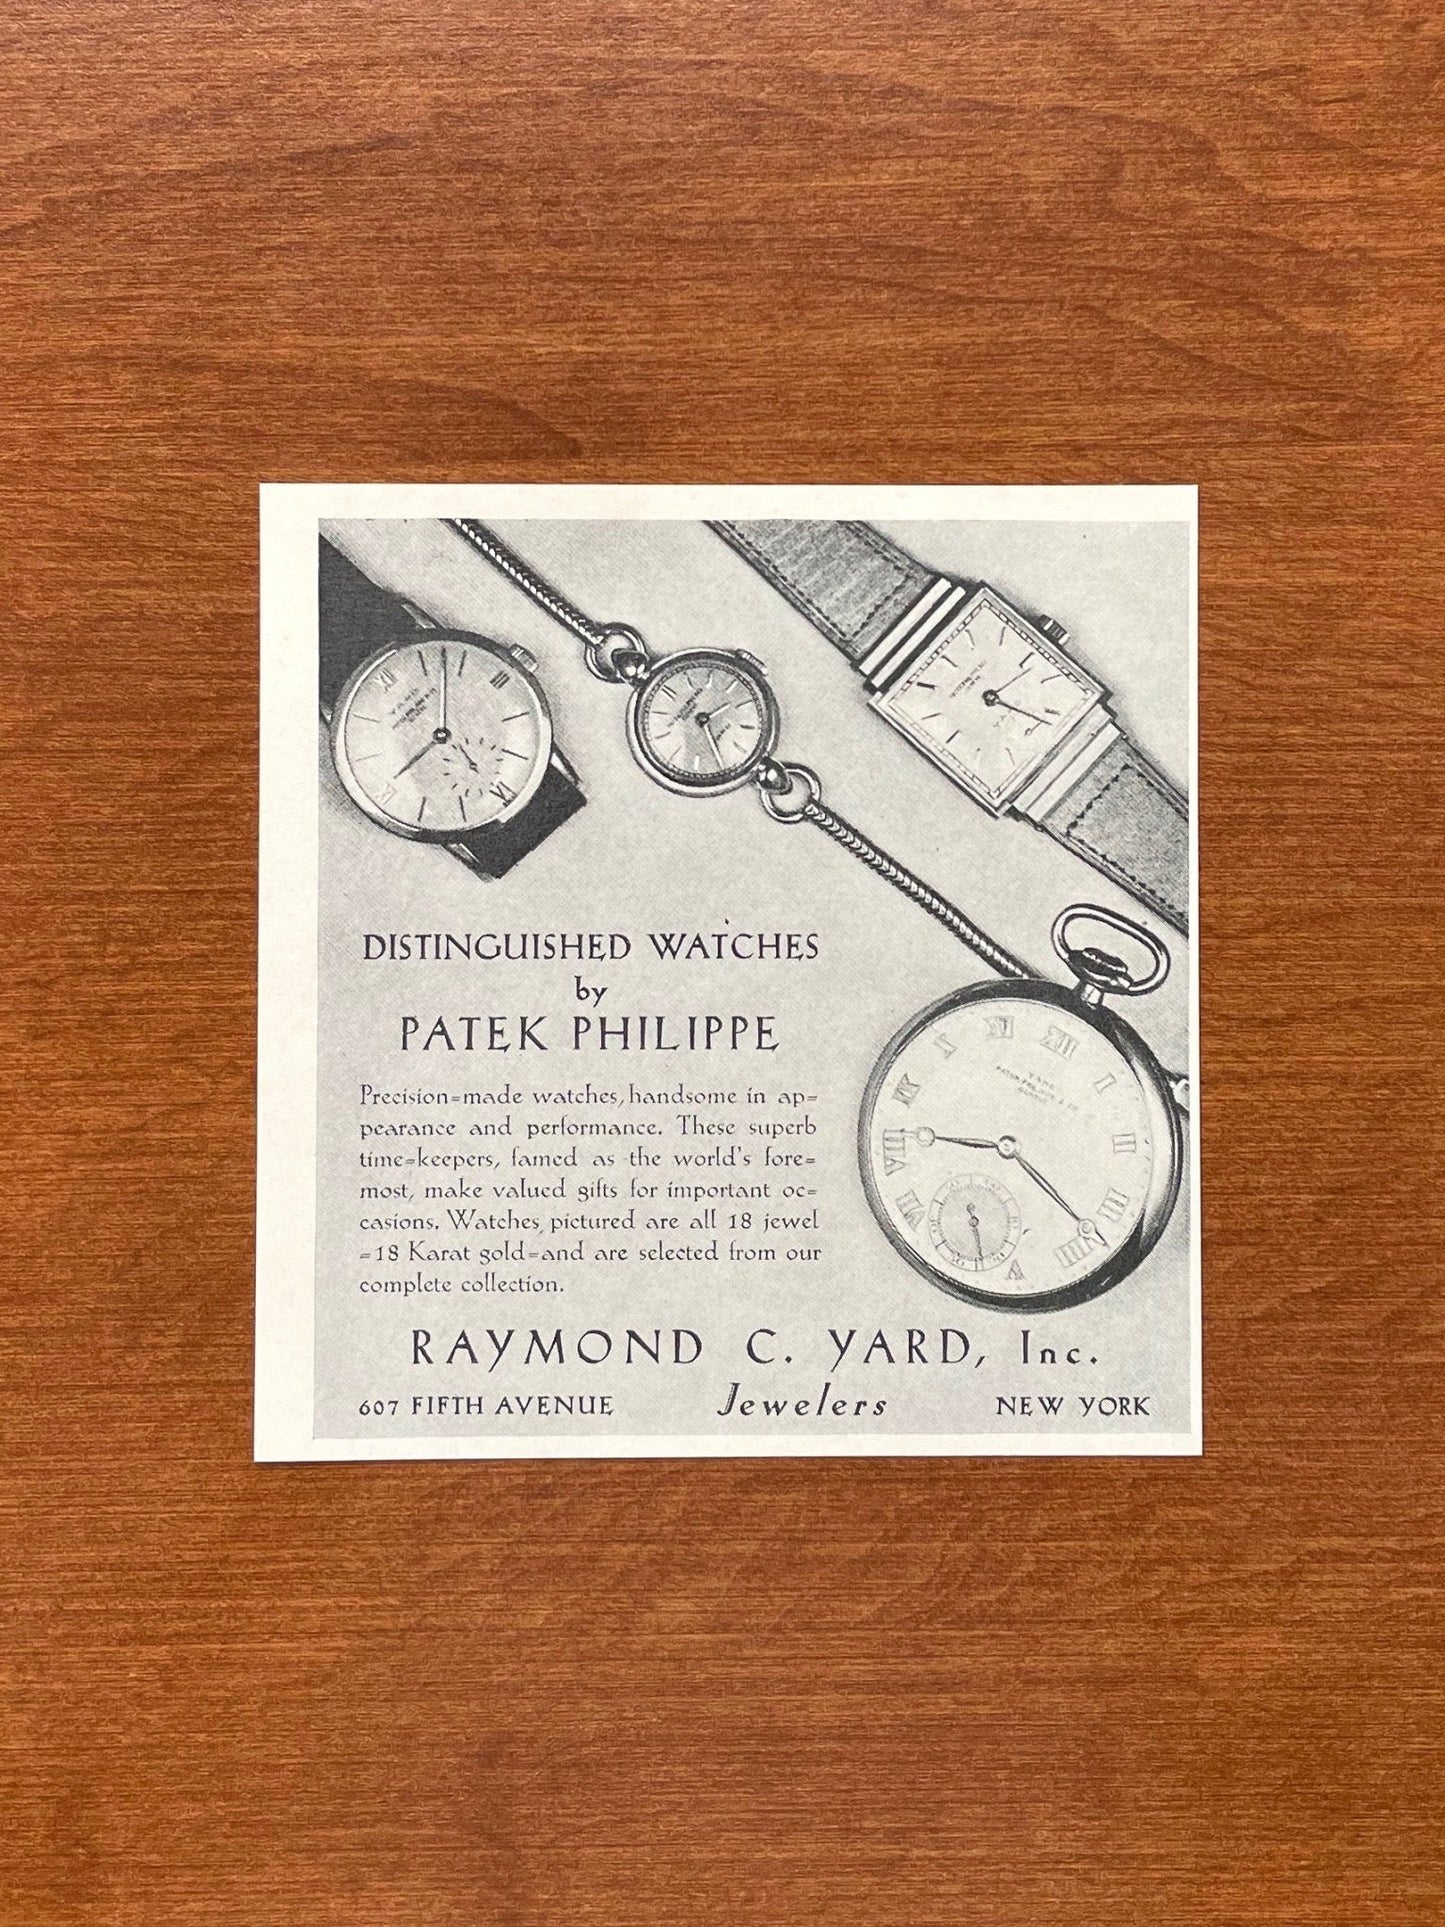 1947 Patek Philippe Watches at Yard Jewelers Advertisement